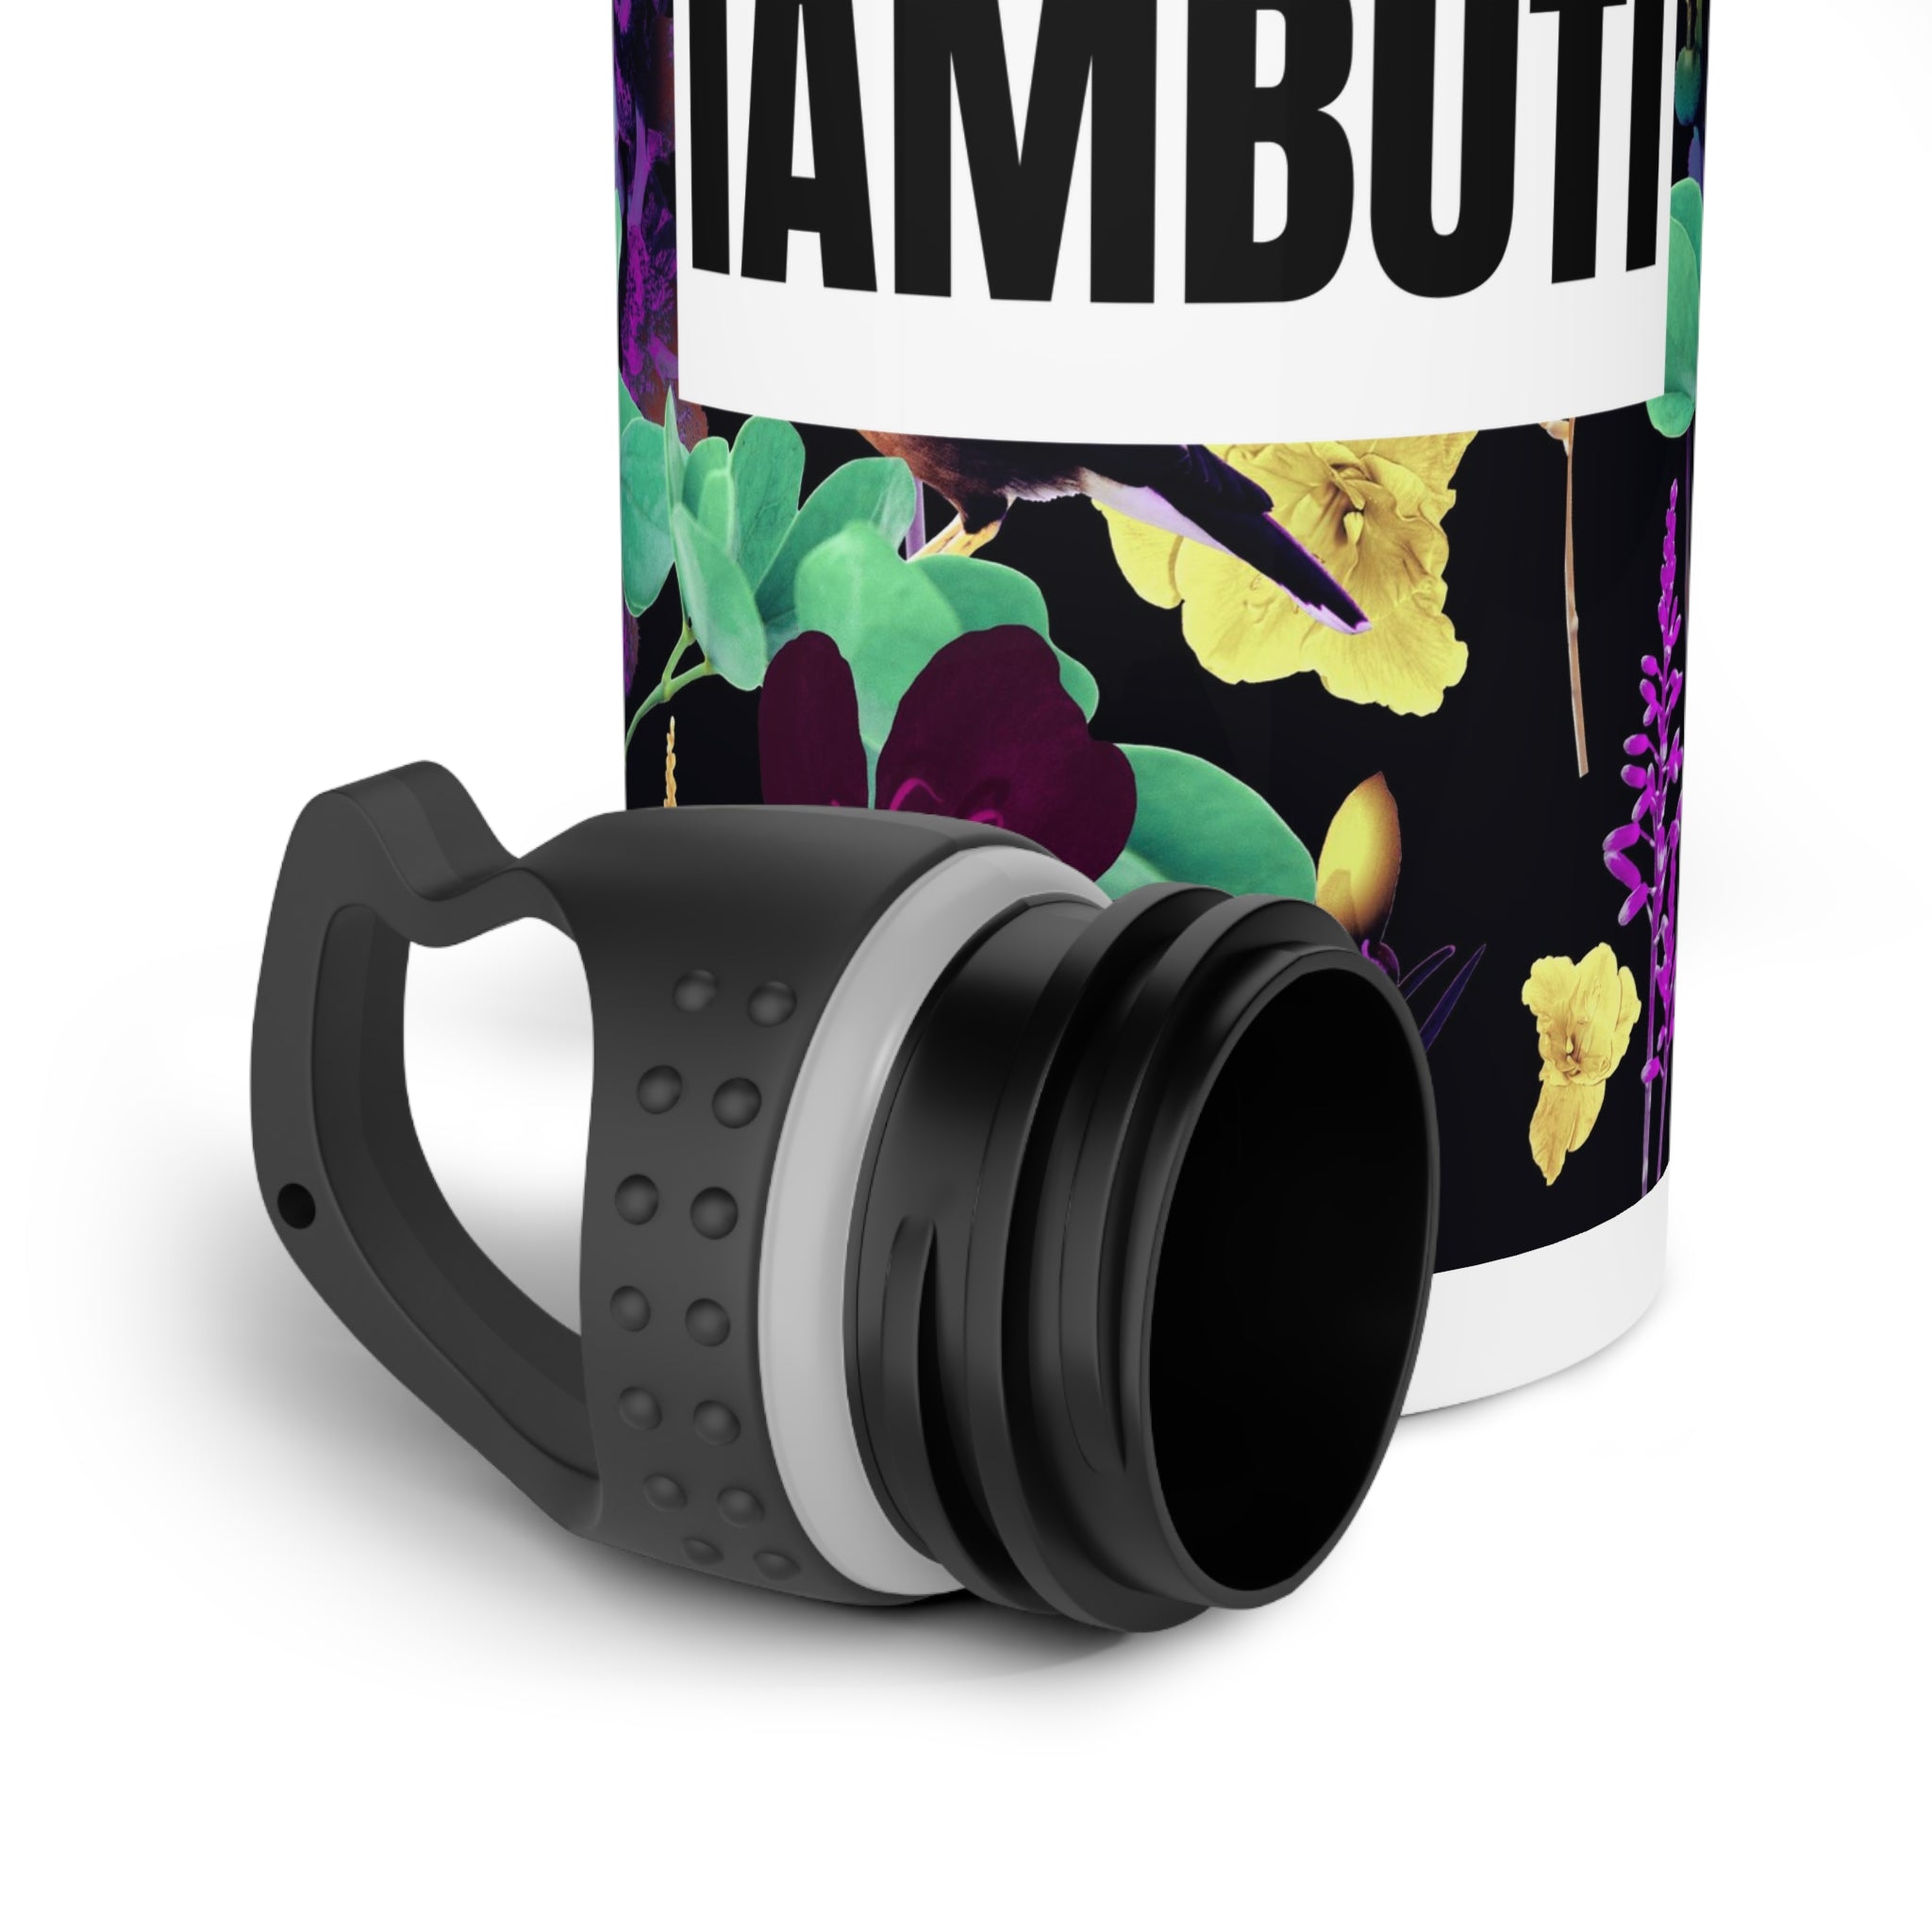 IAMBUTI X Dark Tropical Stainless Steel Gym Water Bottle